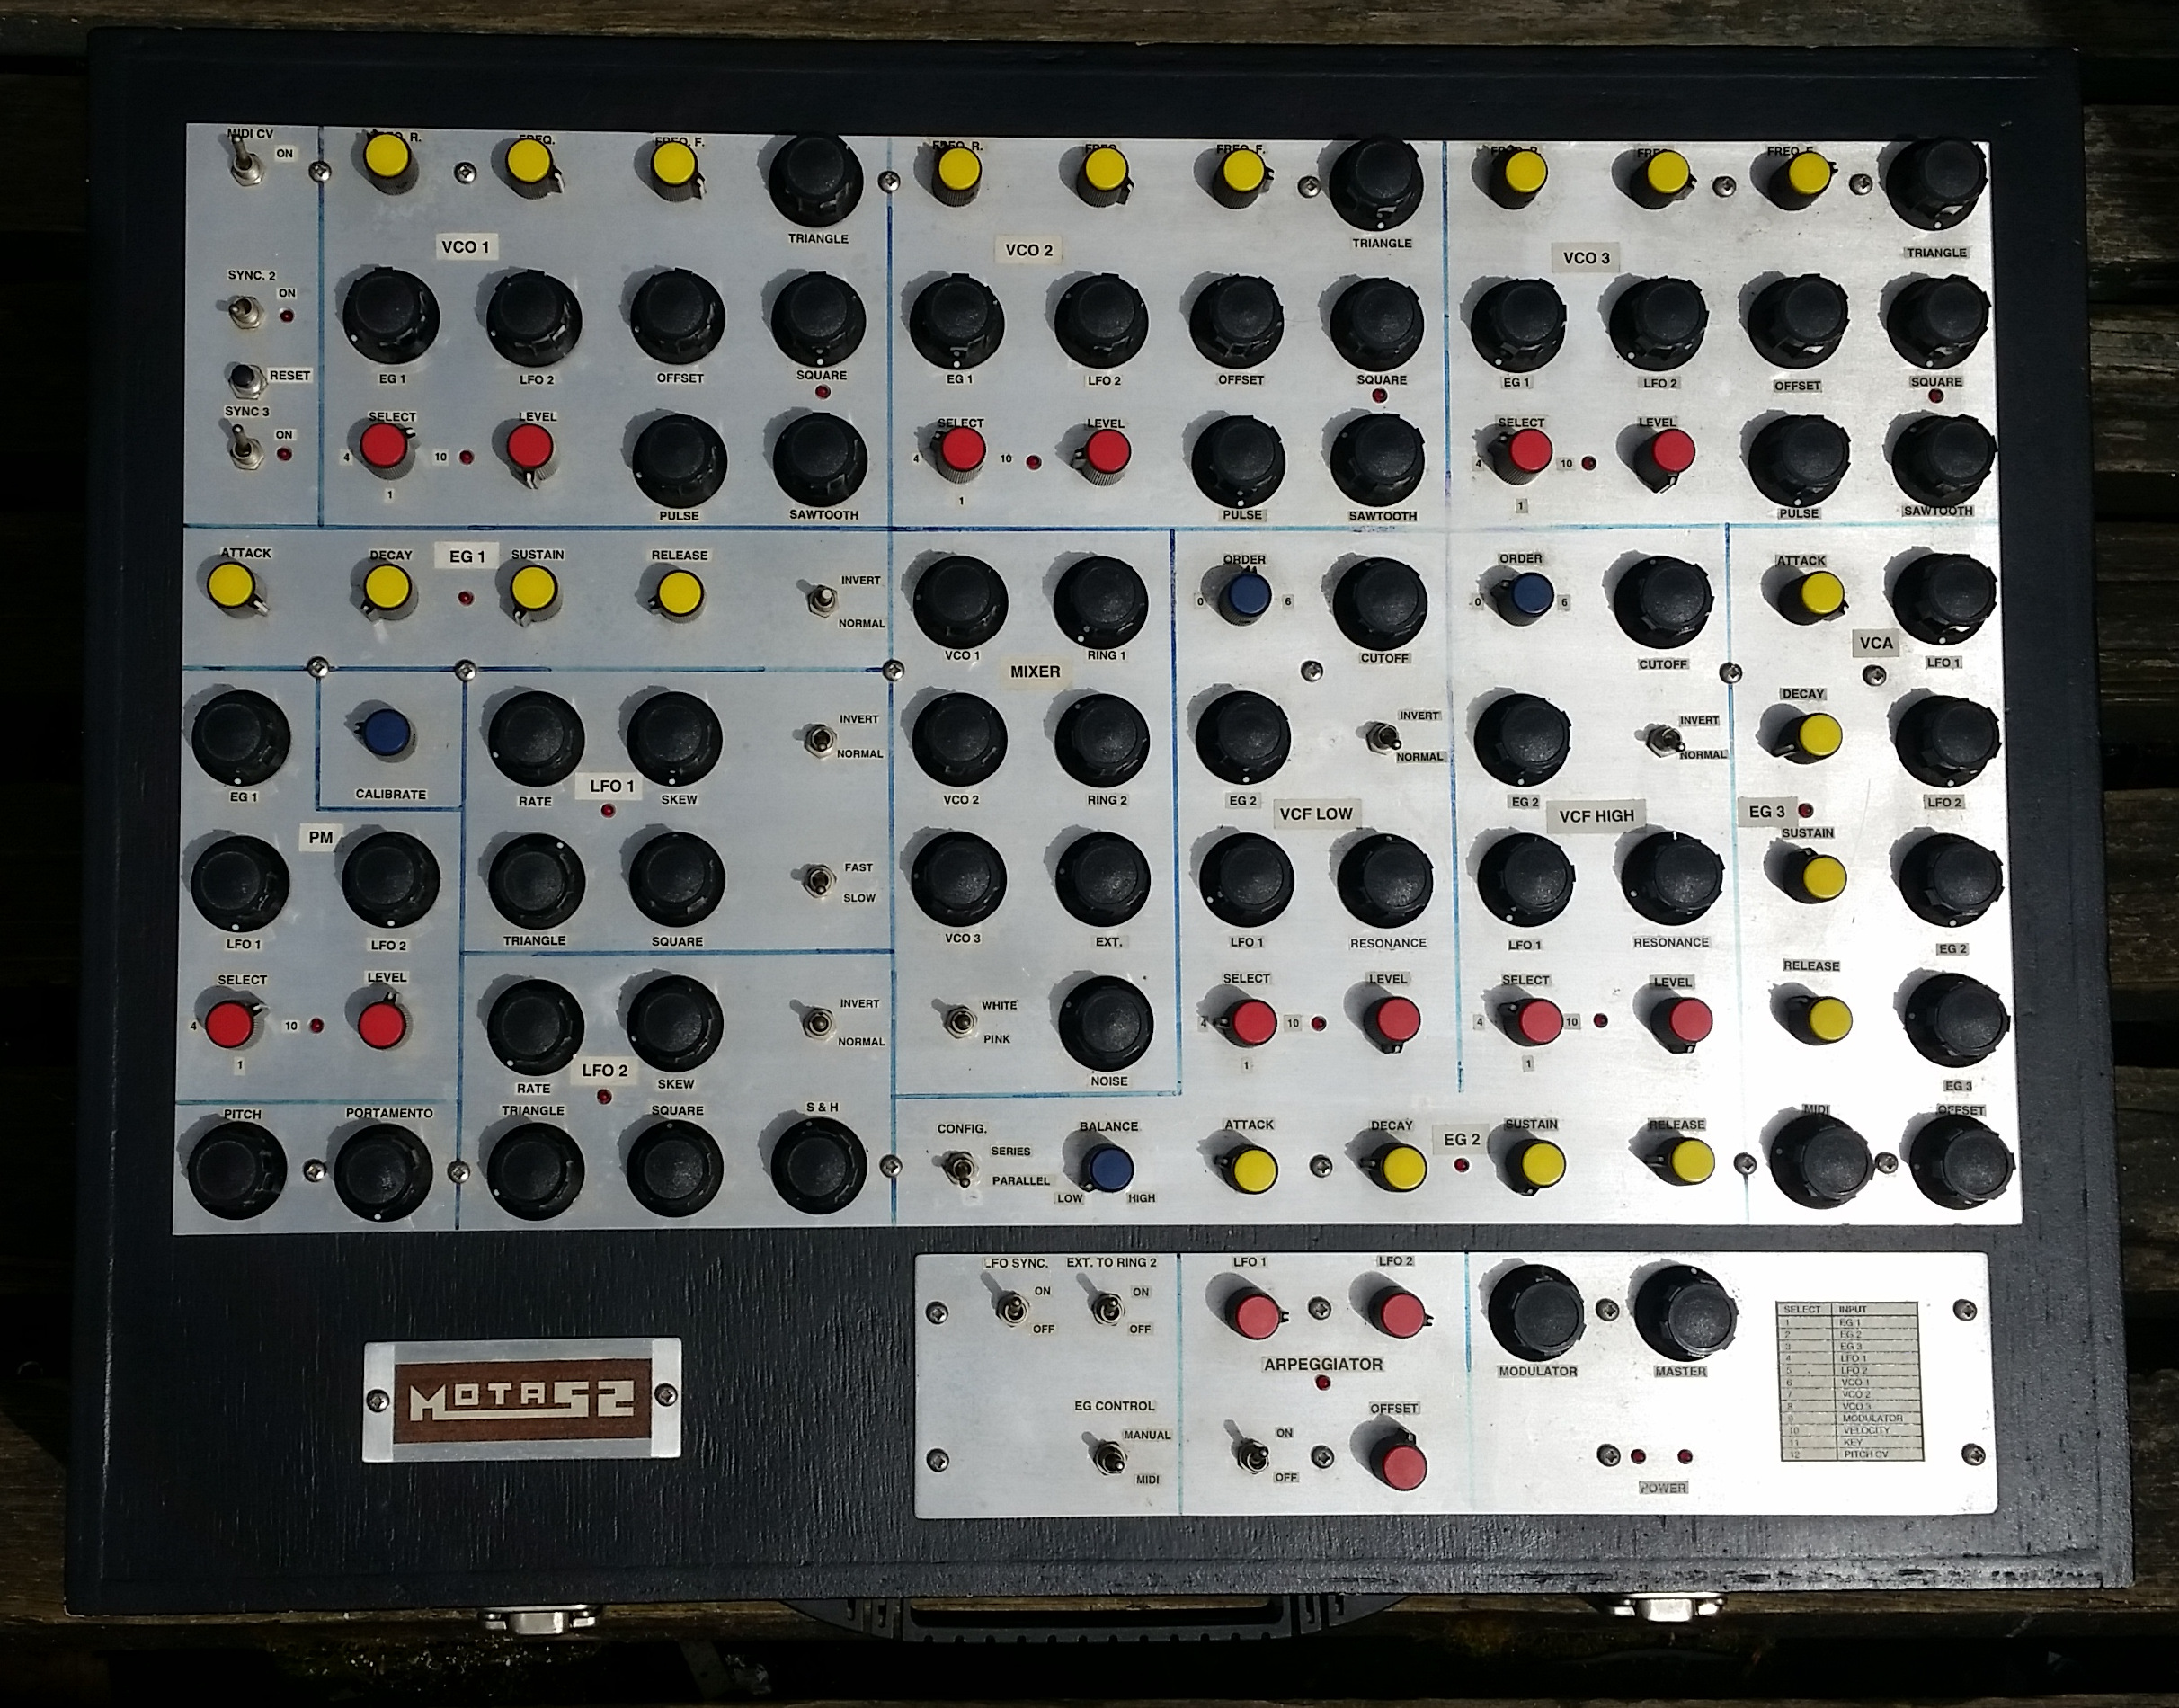 Motas2 analogue synthesizer (created circa 1997)